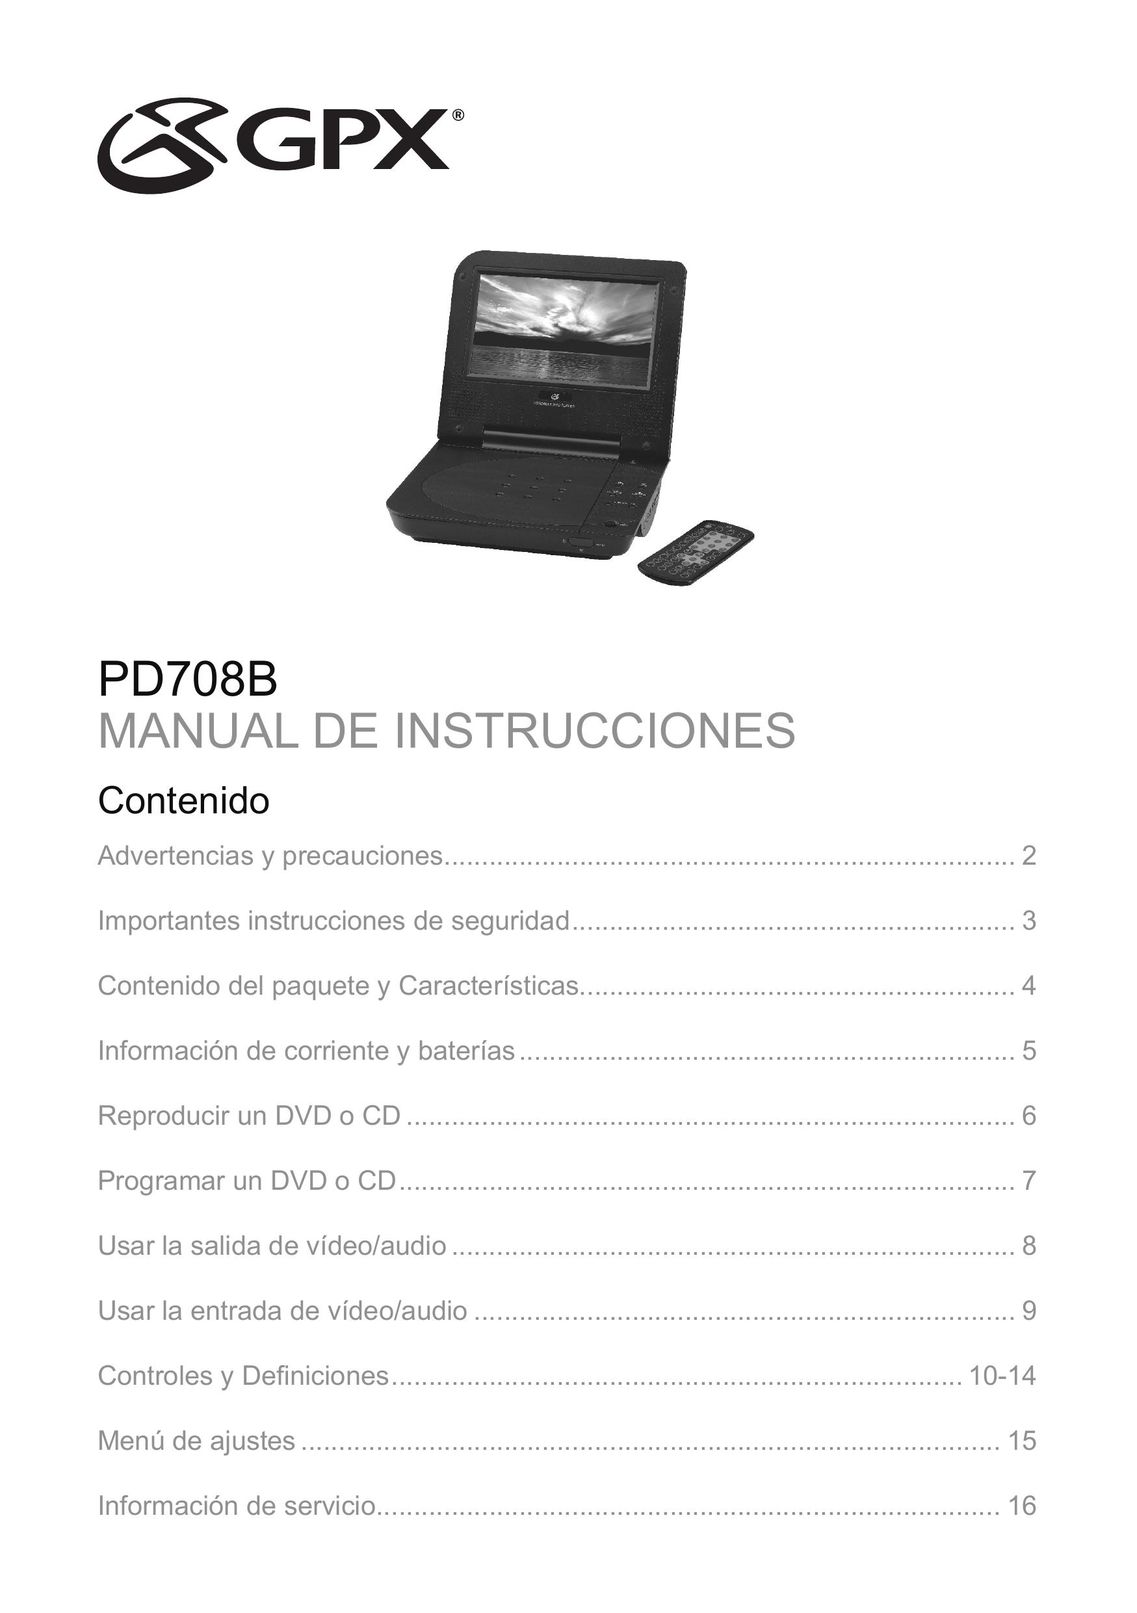 GPX PD708B DVD Player User Manual